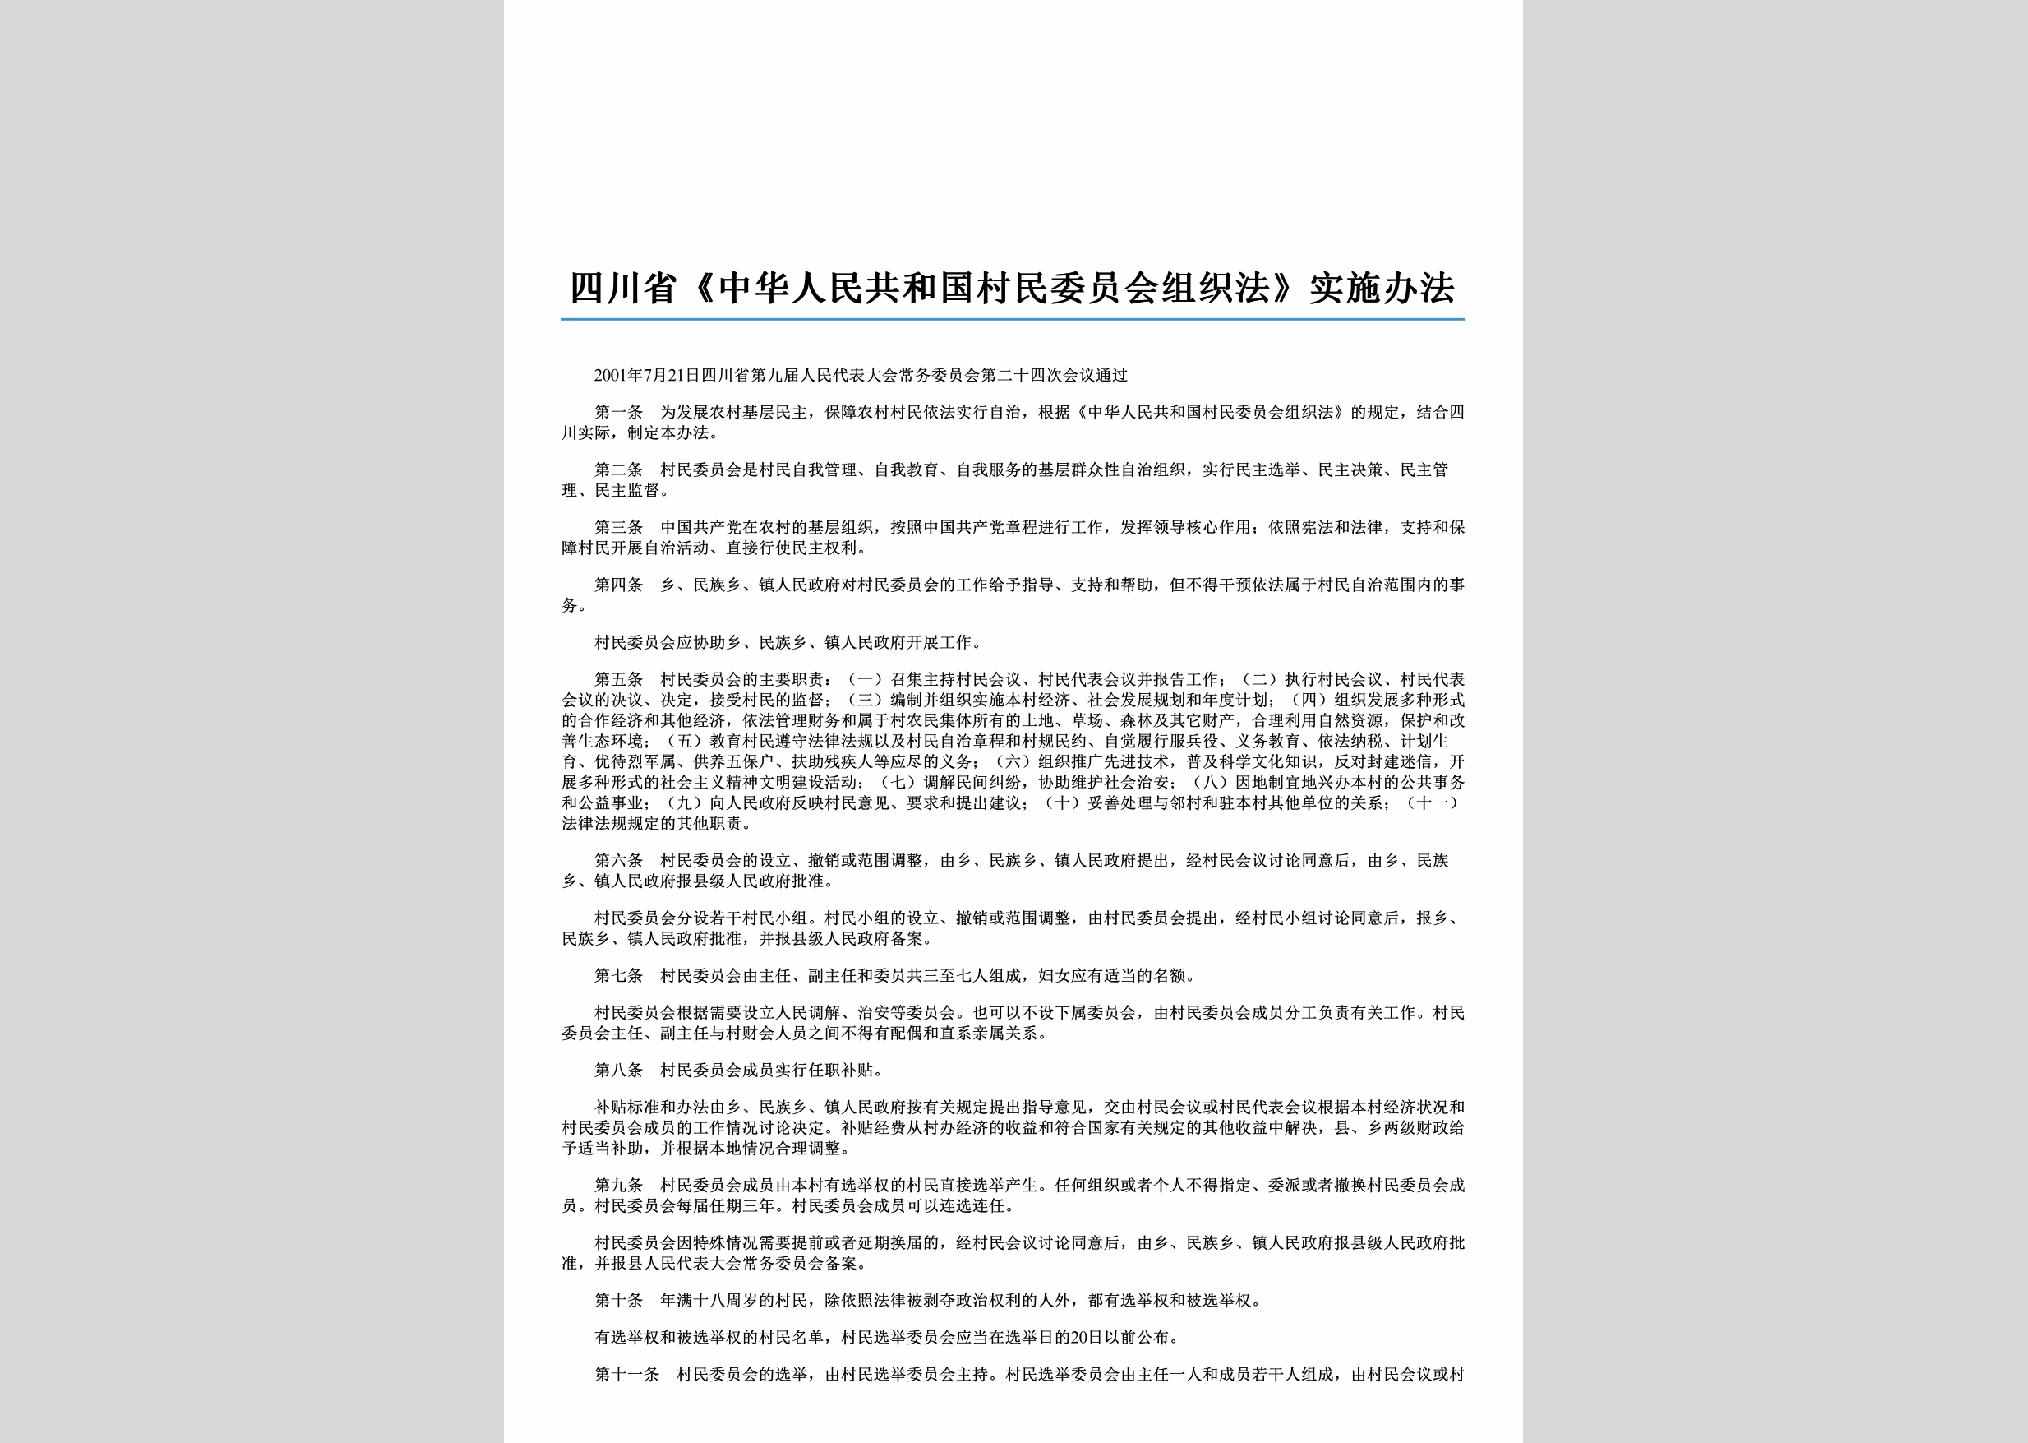 SC-WYHZZBF-2006：四川省《中华人民共和国村民委员会组织法》实施办法